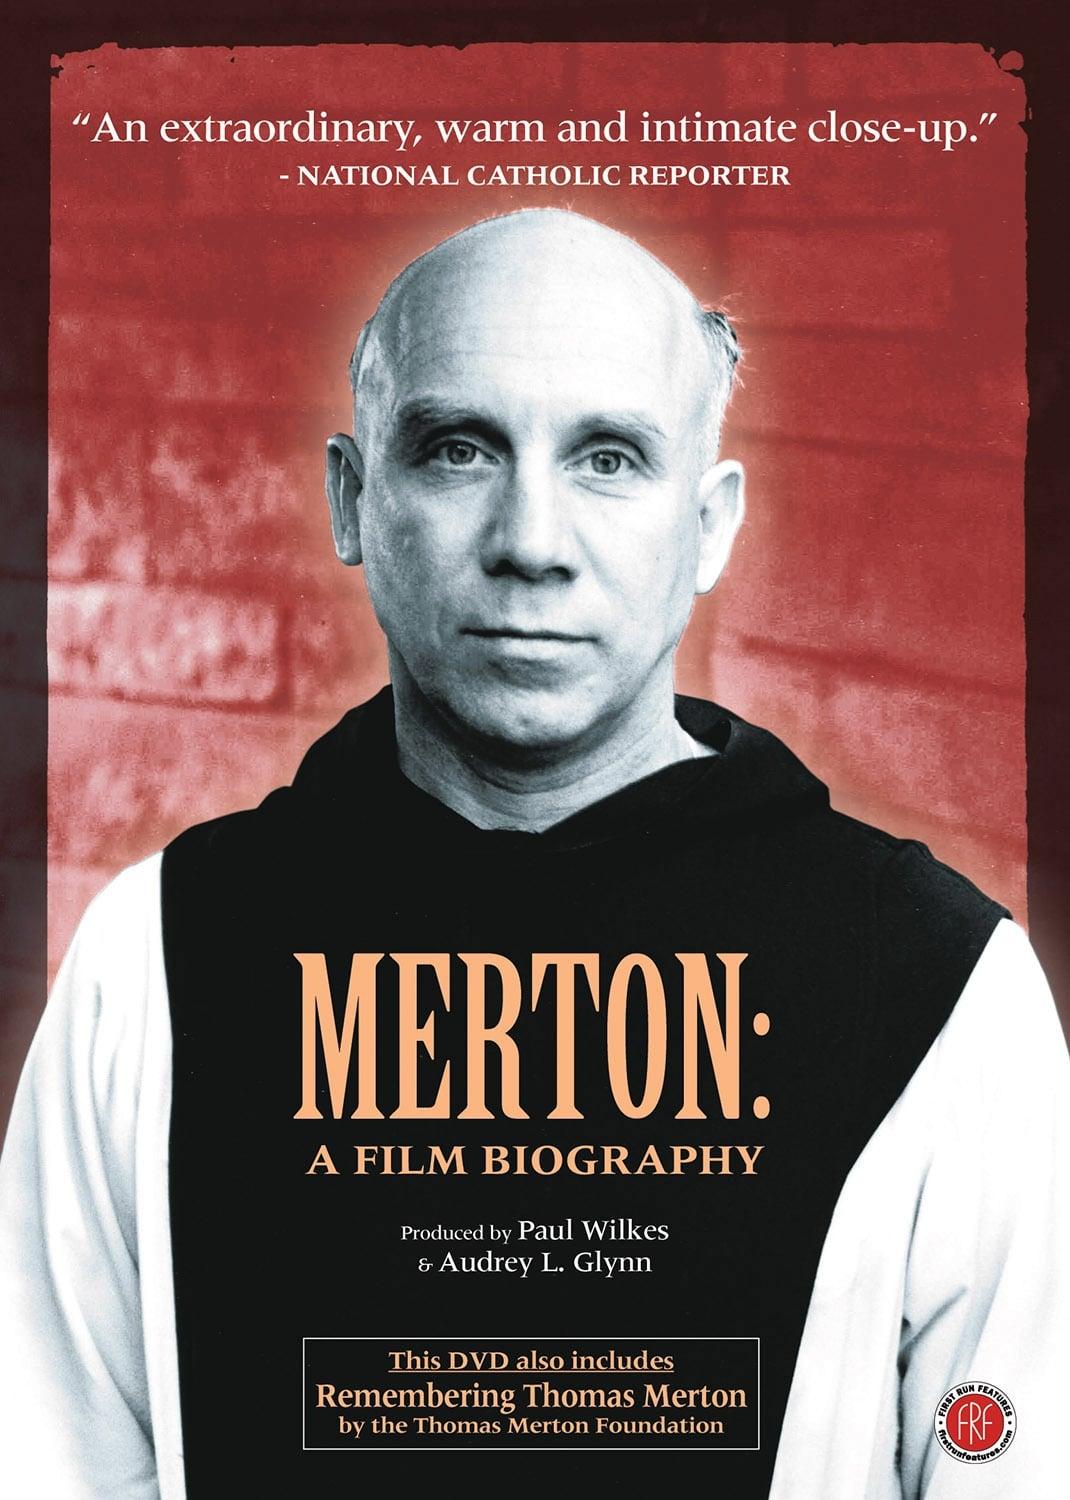 Merton: A Film Biography poster